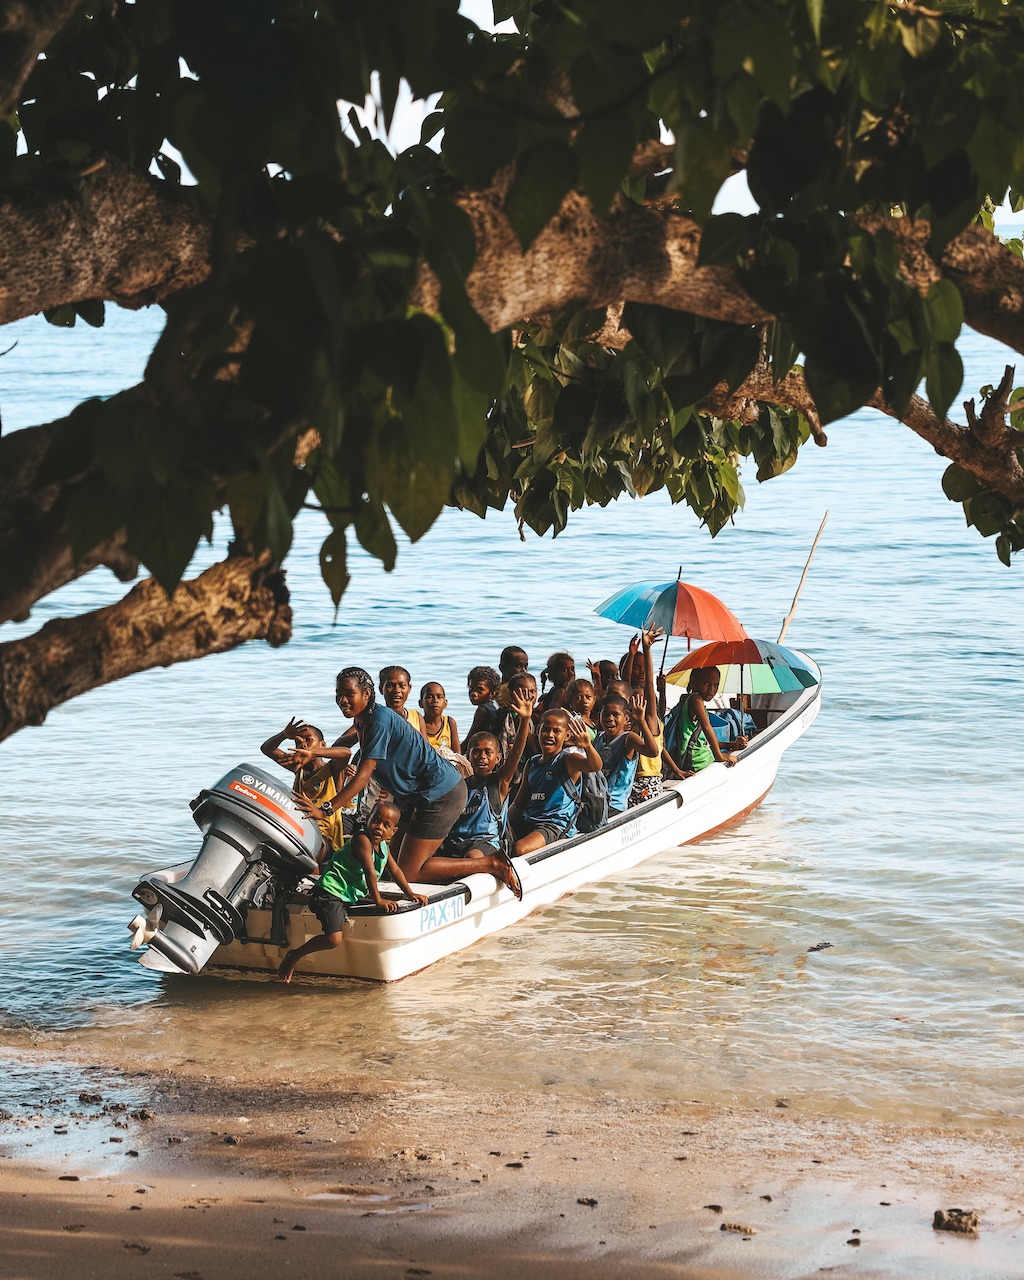 Kids going back home after school via boat - Taveuni Island - Fiji